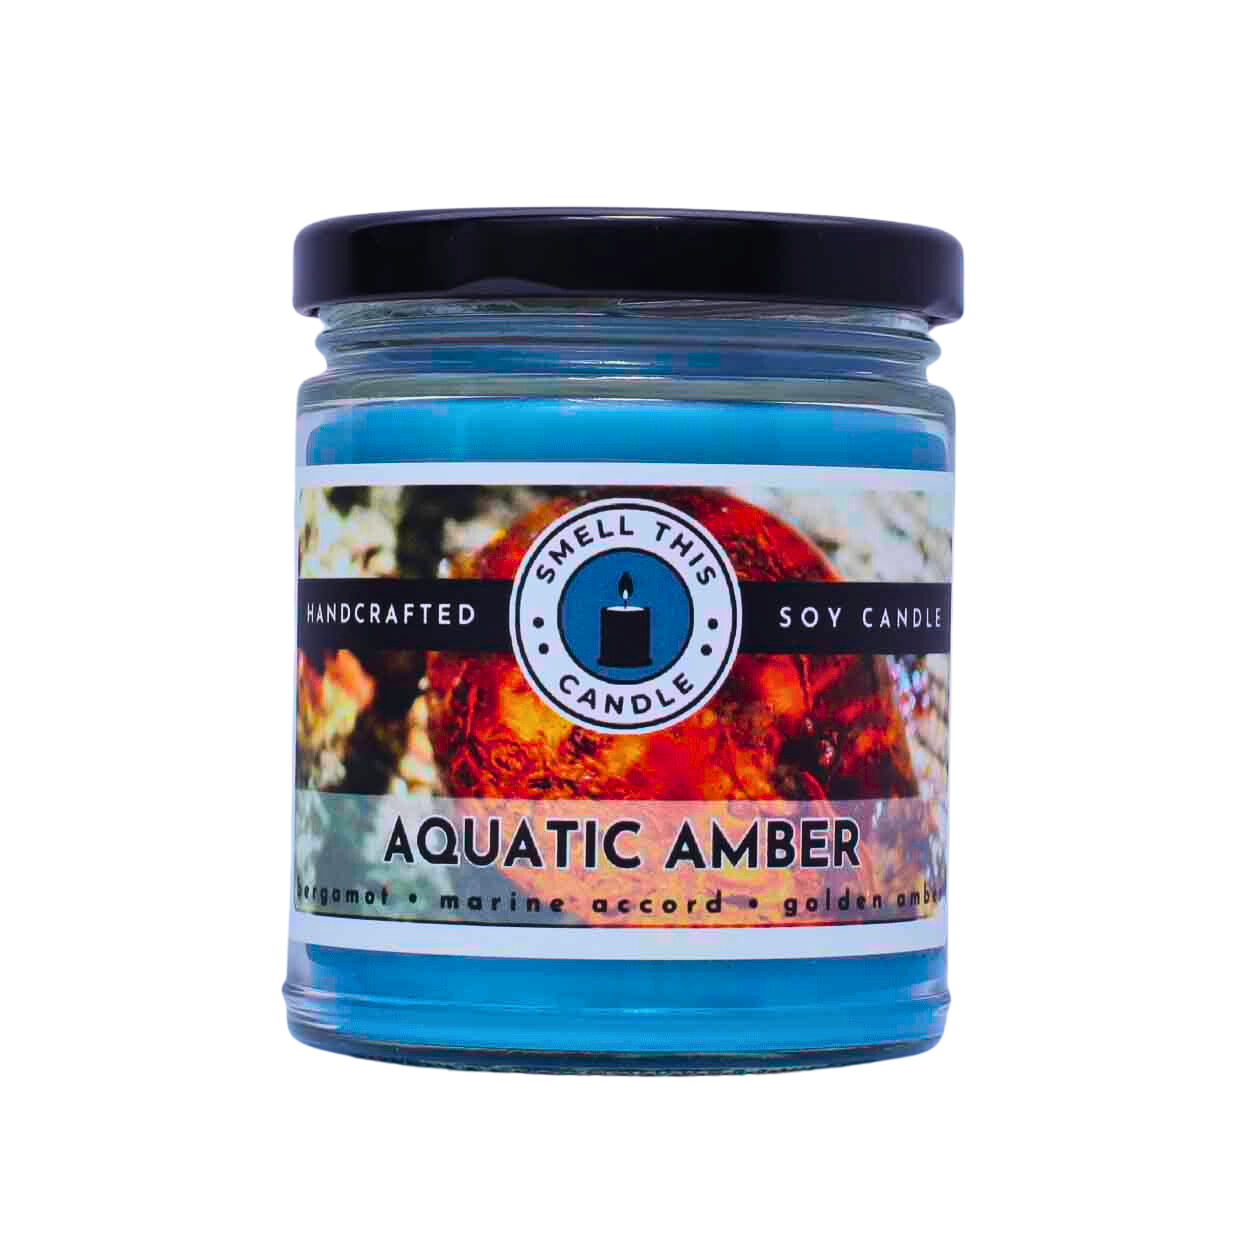 Aquatic Amber candle